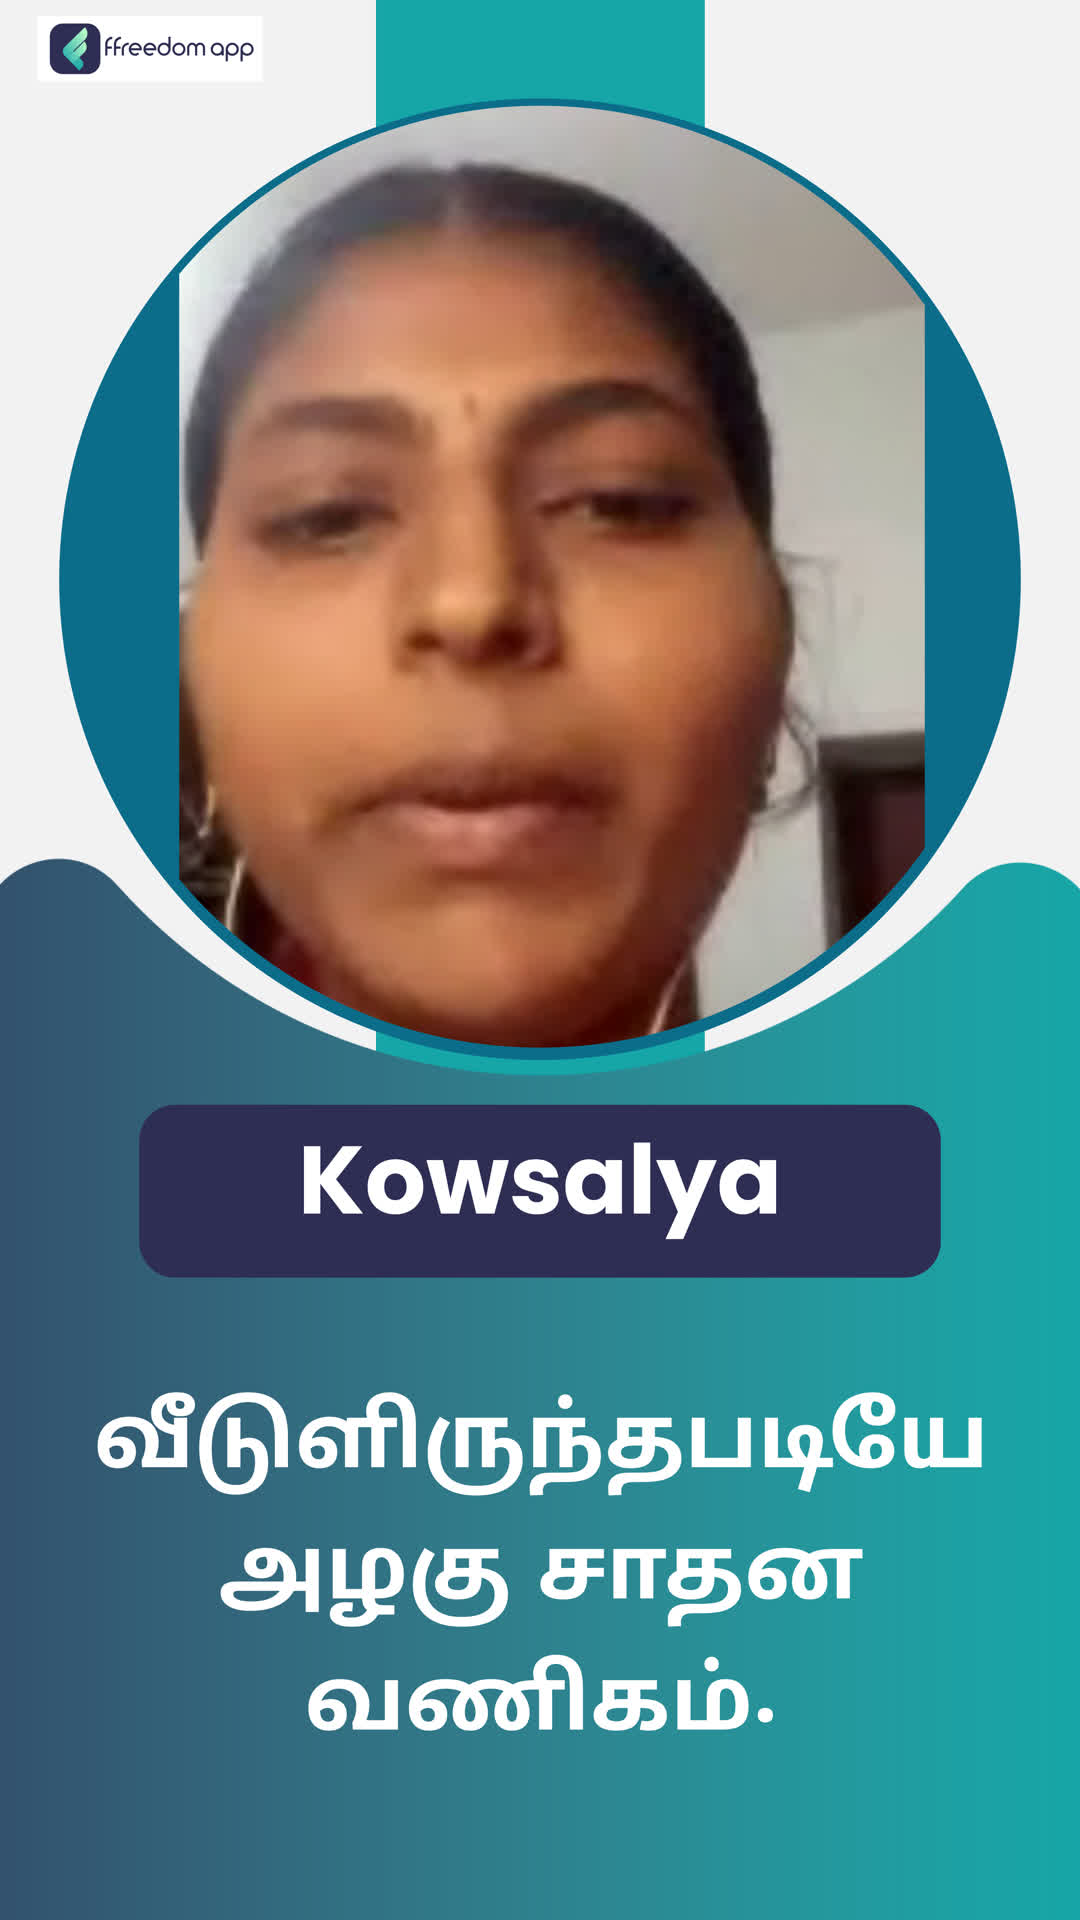 Kowsalya . S's Honest Review of ffreedom app - Erode ,Tamil Nadu